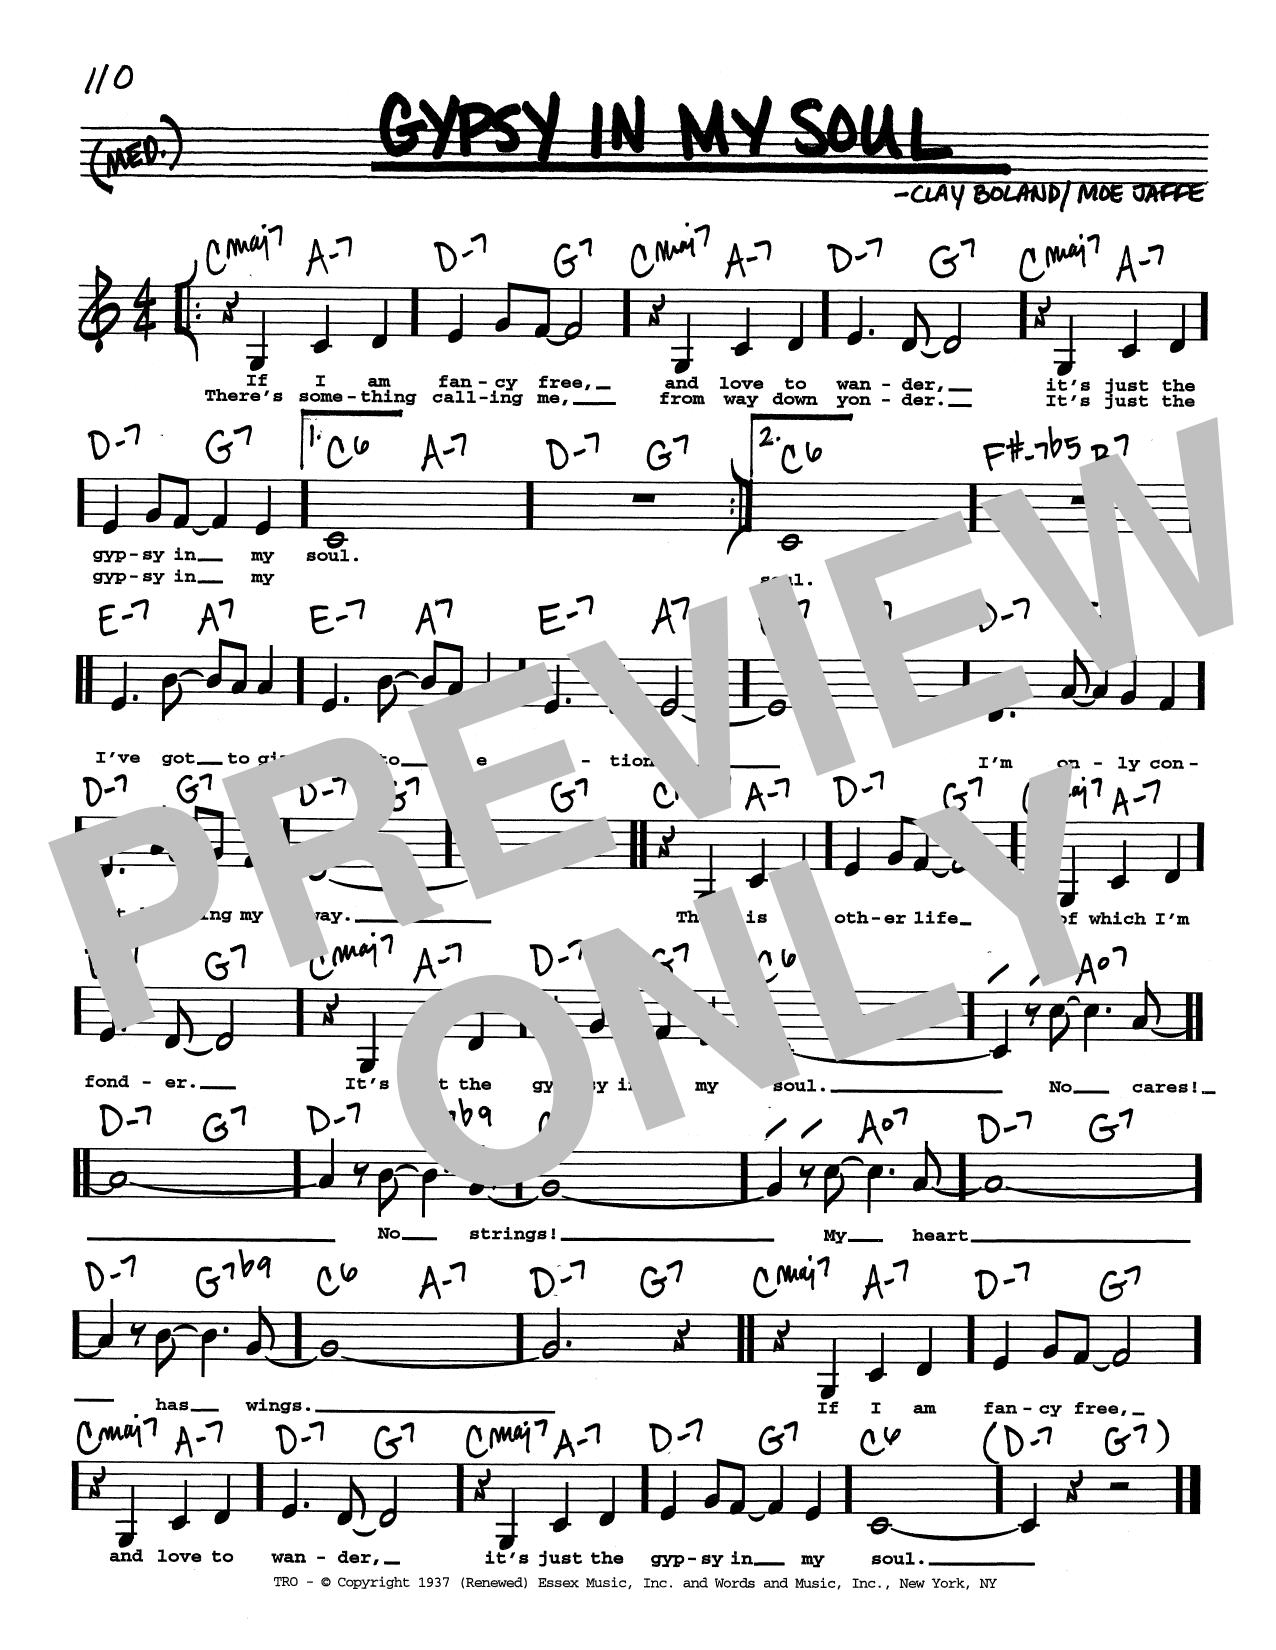 Moe Jaffe Gypsy In My Soul (Low Voice) sheet music notes printable PDF score